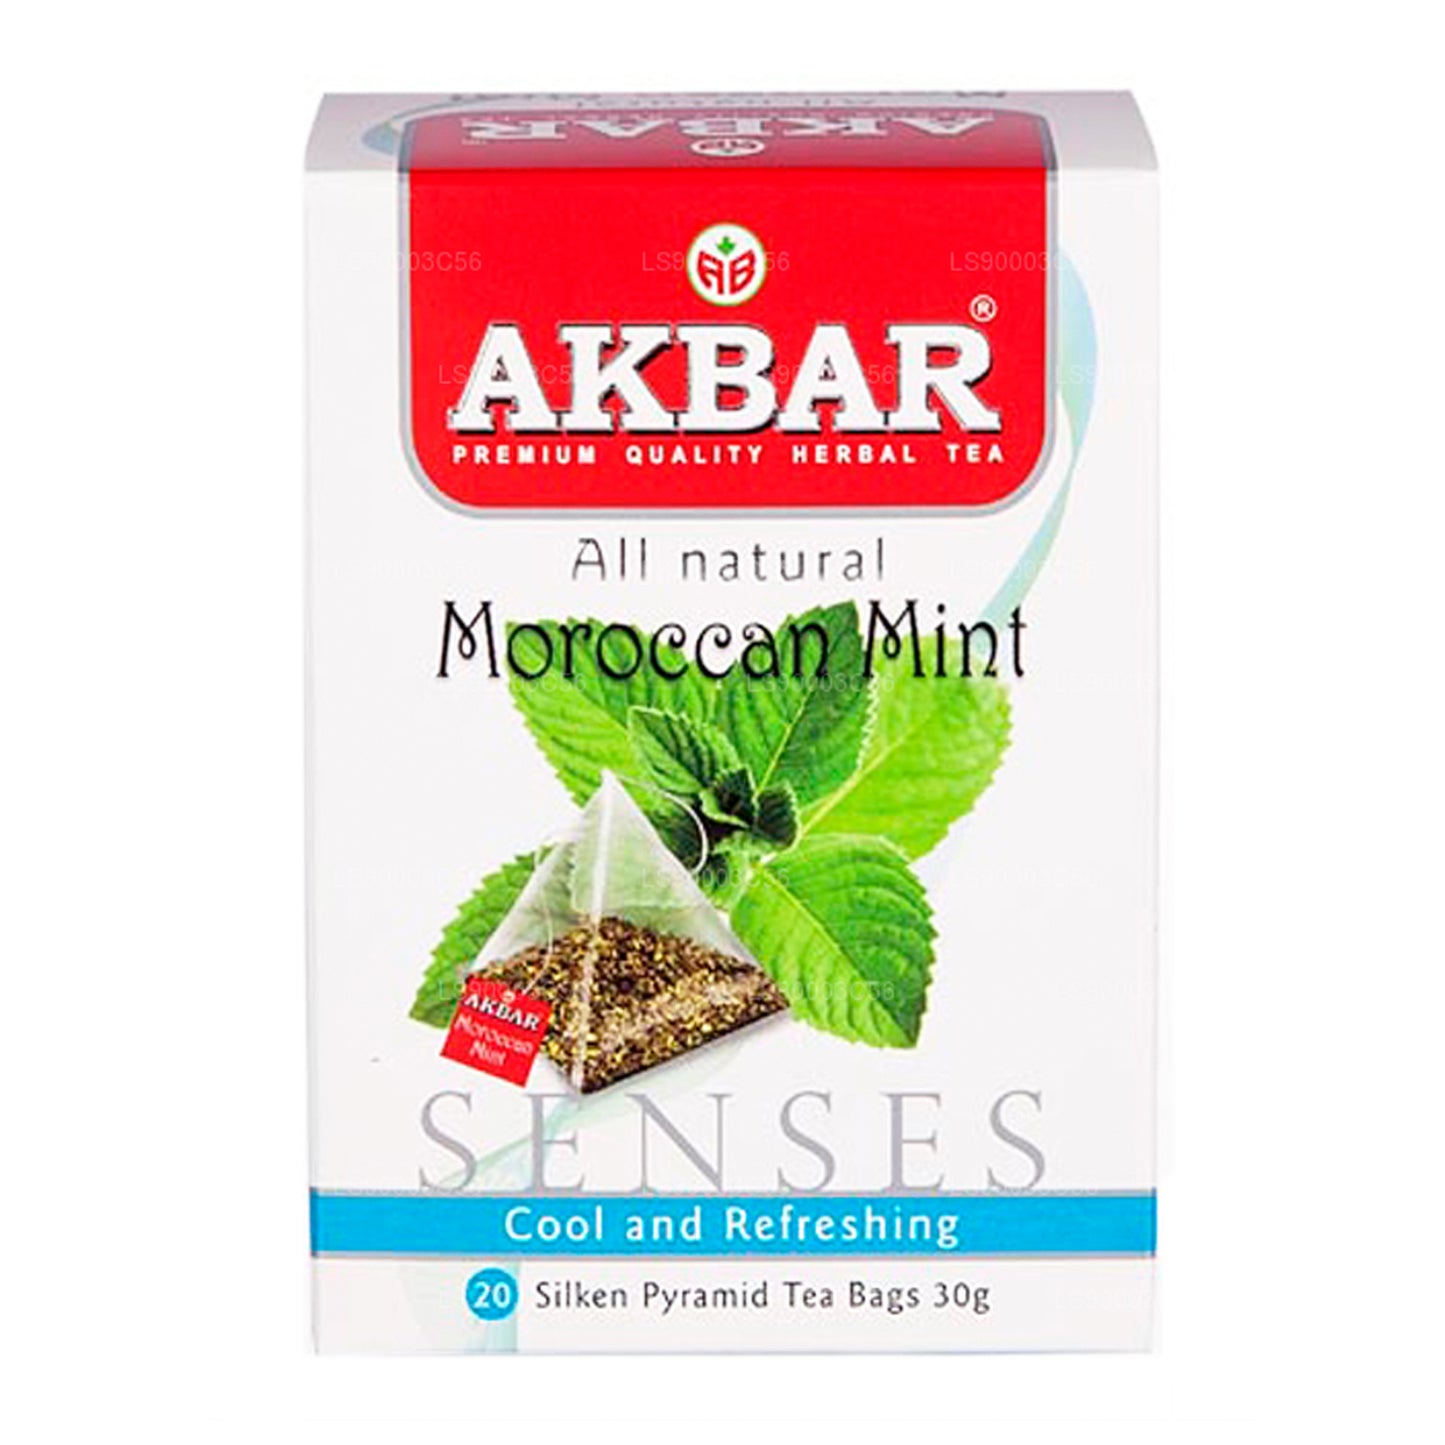 Akbar Morroccan Mint (30g) 20 Tea Bags